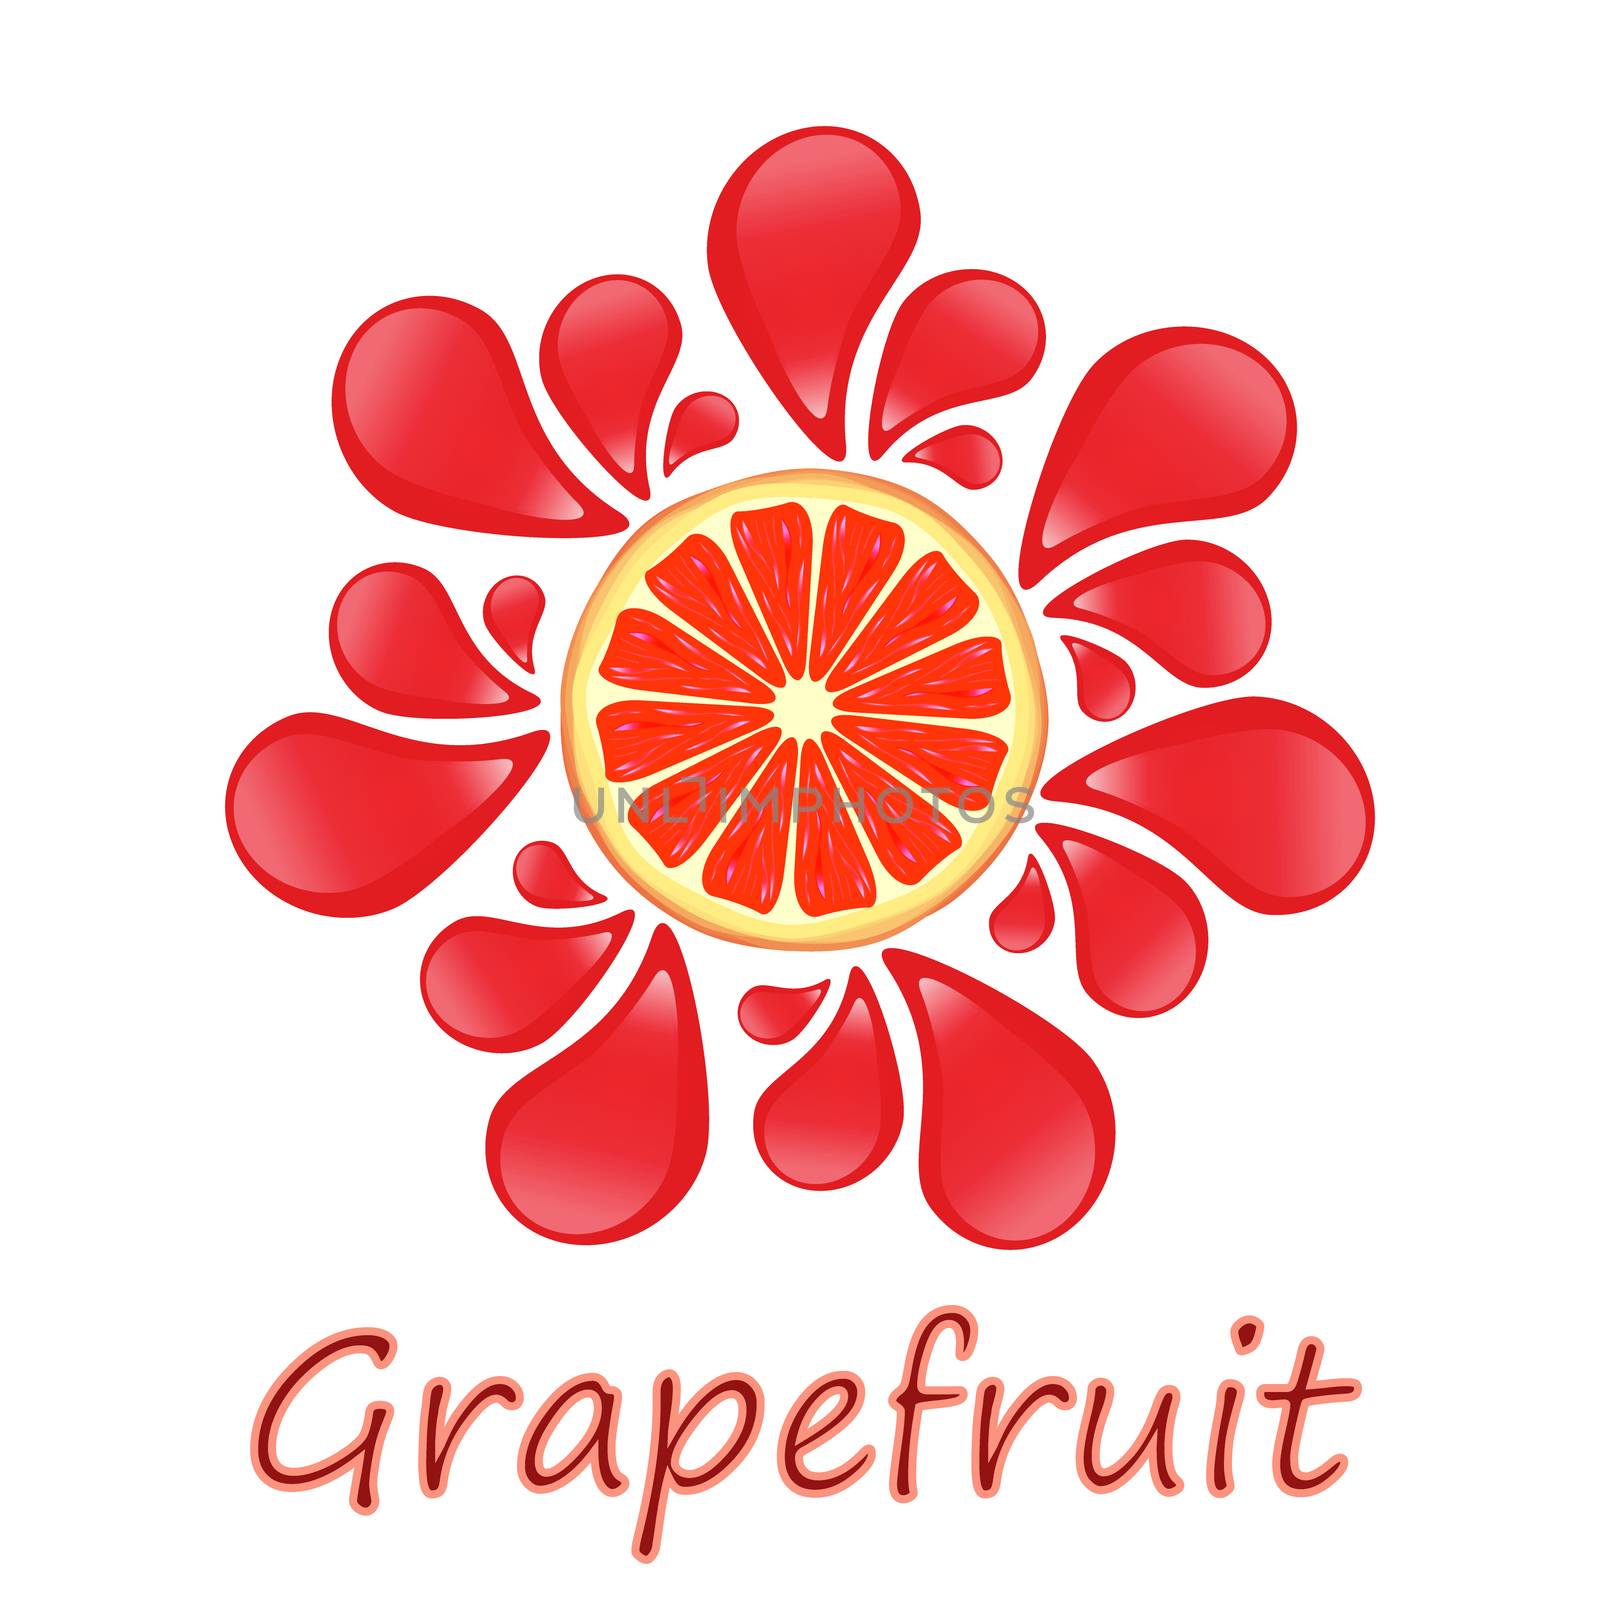 Bright illustration of grapefruit slice with juice drops around